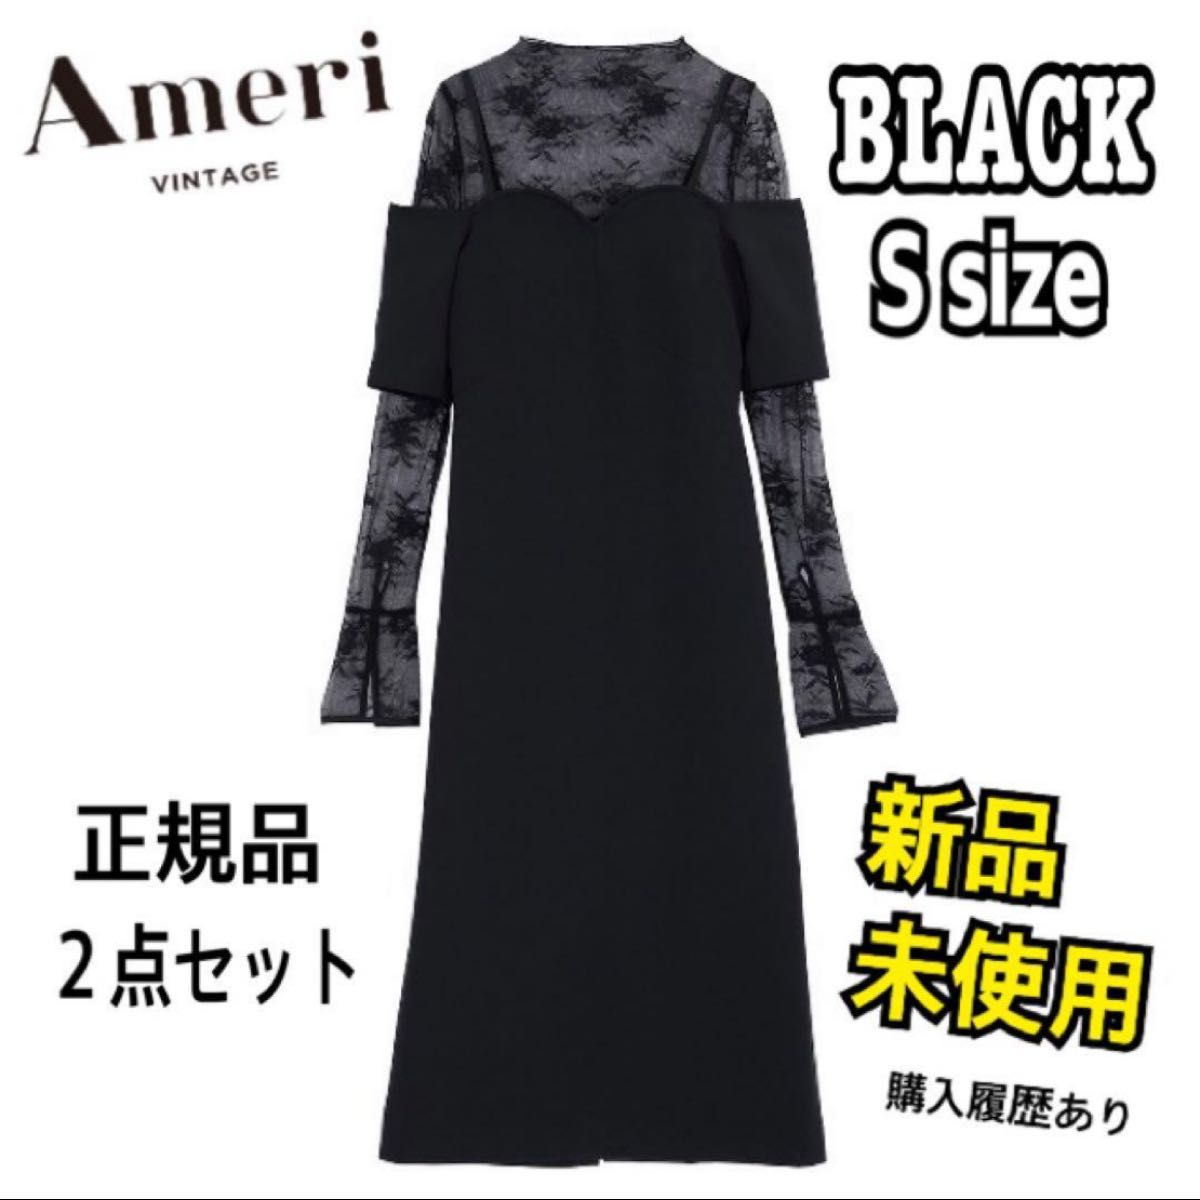 【Ameri】 LACE TOP SET FASCINATION DRESS